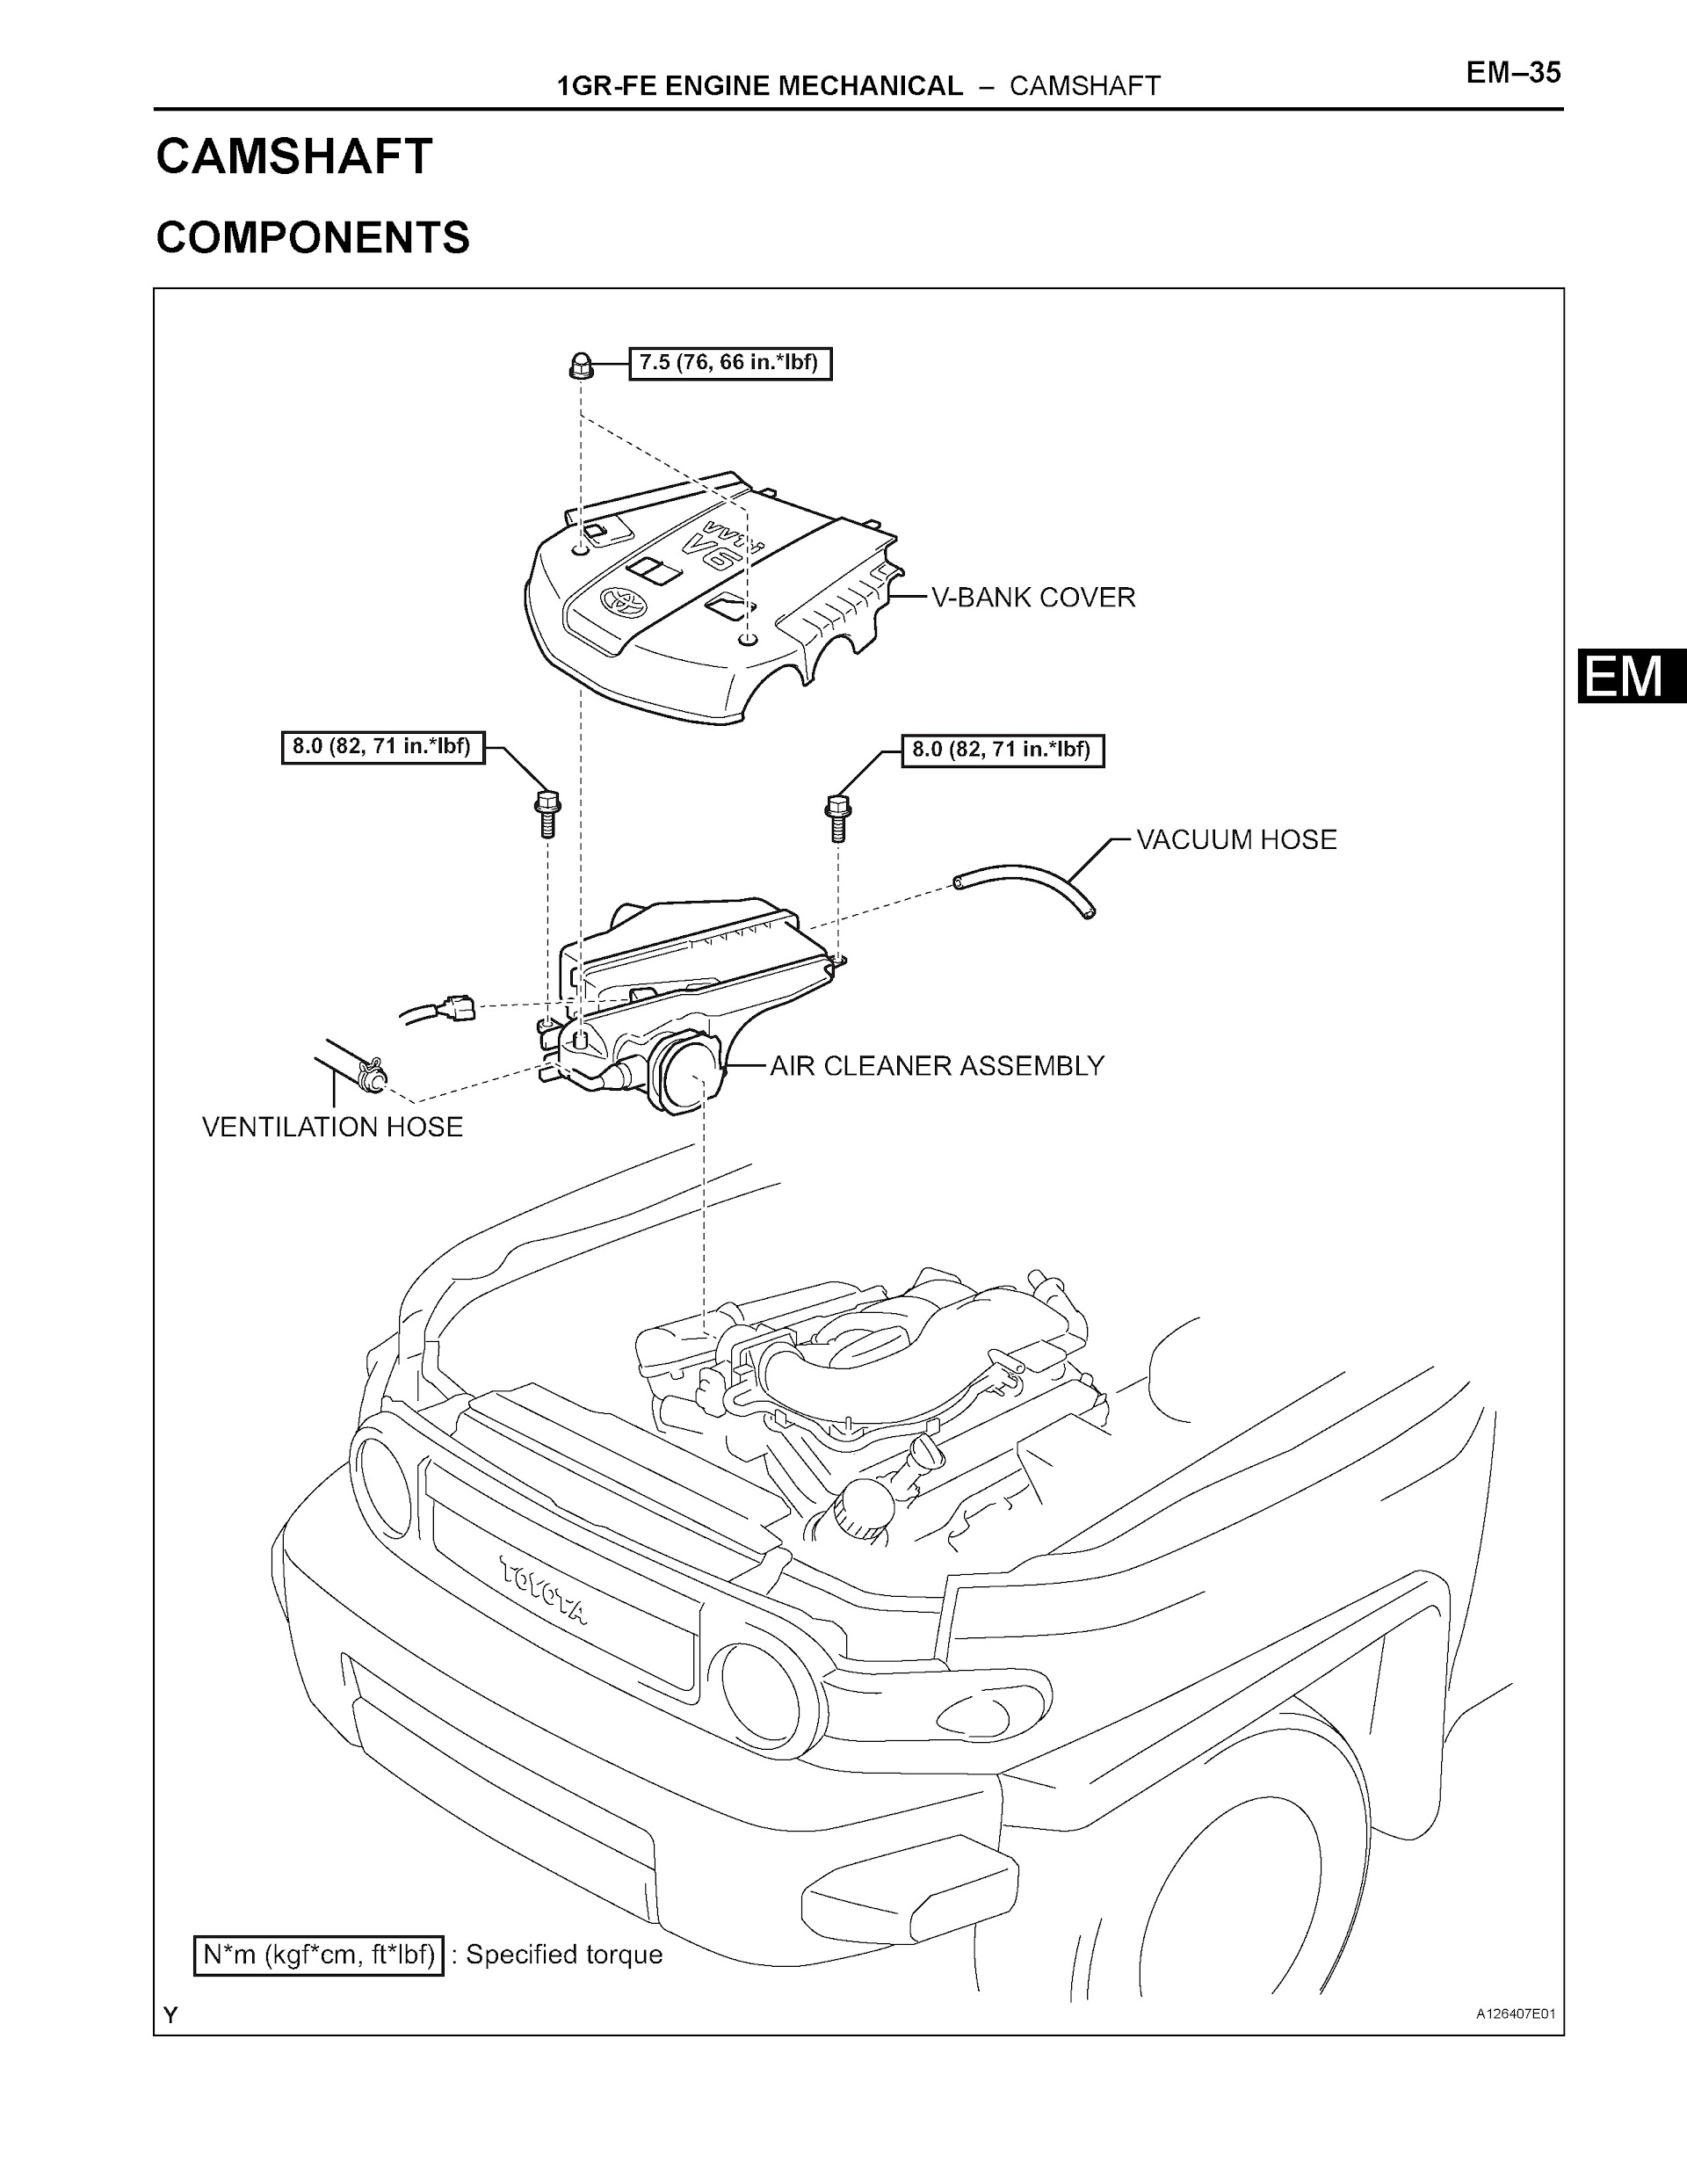 Toyota FJ Cruiser Repair Manual, 1GR-FE Engine Mechanical, Camshaft